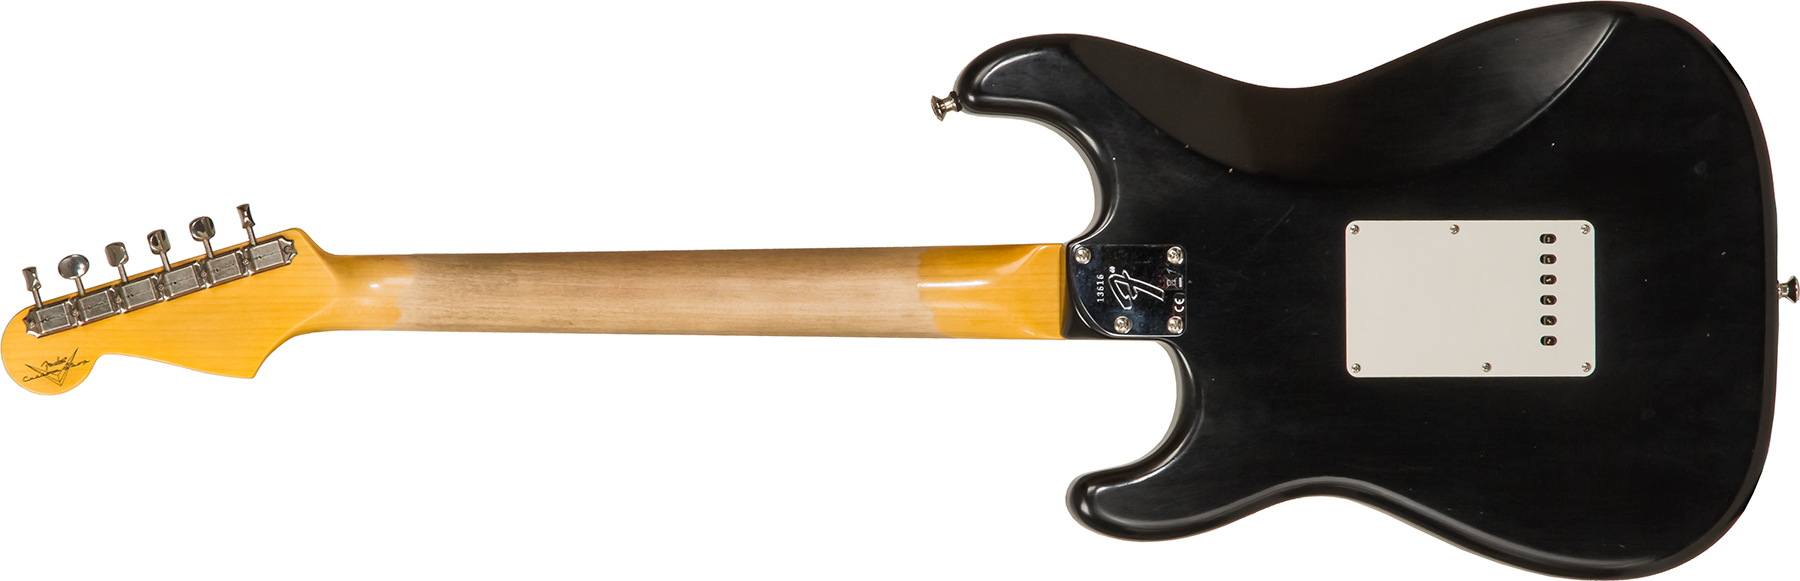 Fender Custom Shop Strat Postmodern 3s Trem Rw #xn13616 - Journeyman Relic Aged Black - E-Gitarre in Str-Form - Variation 1